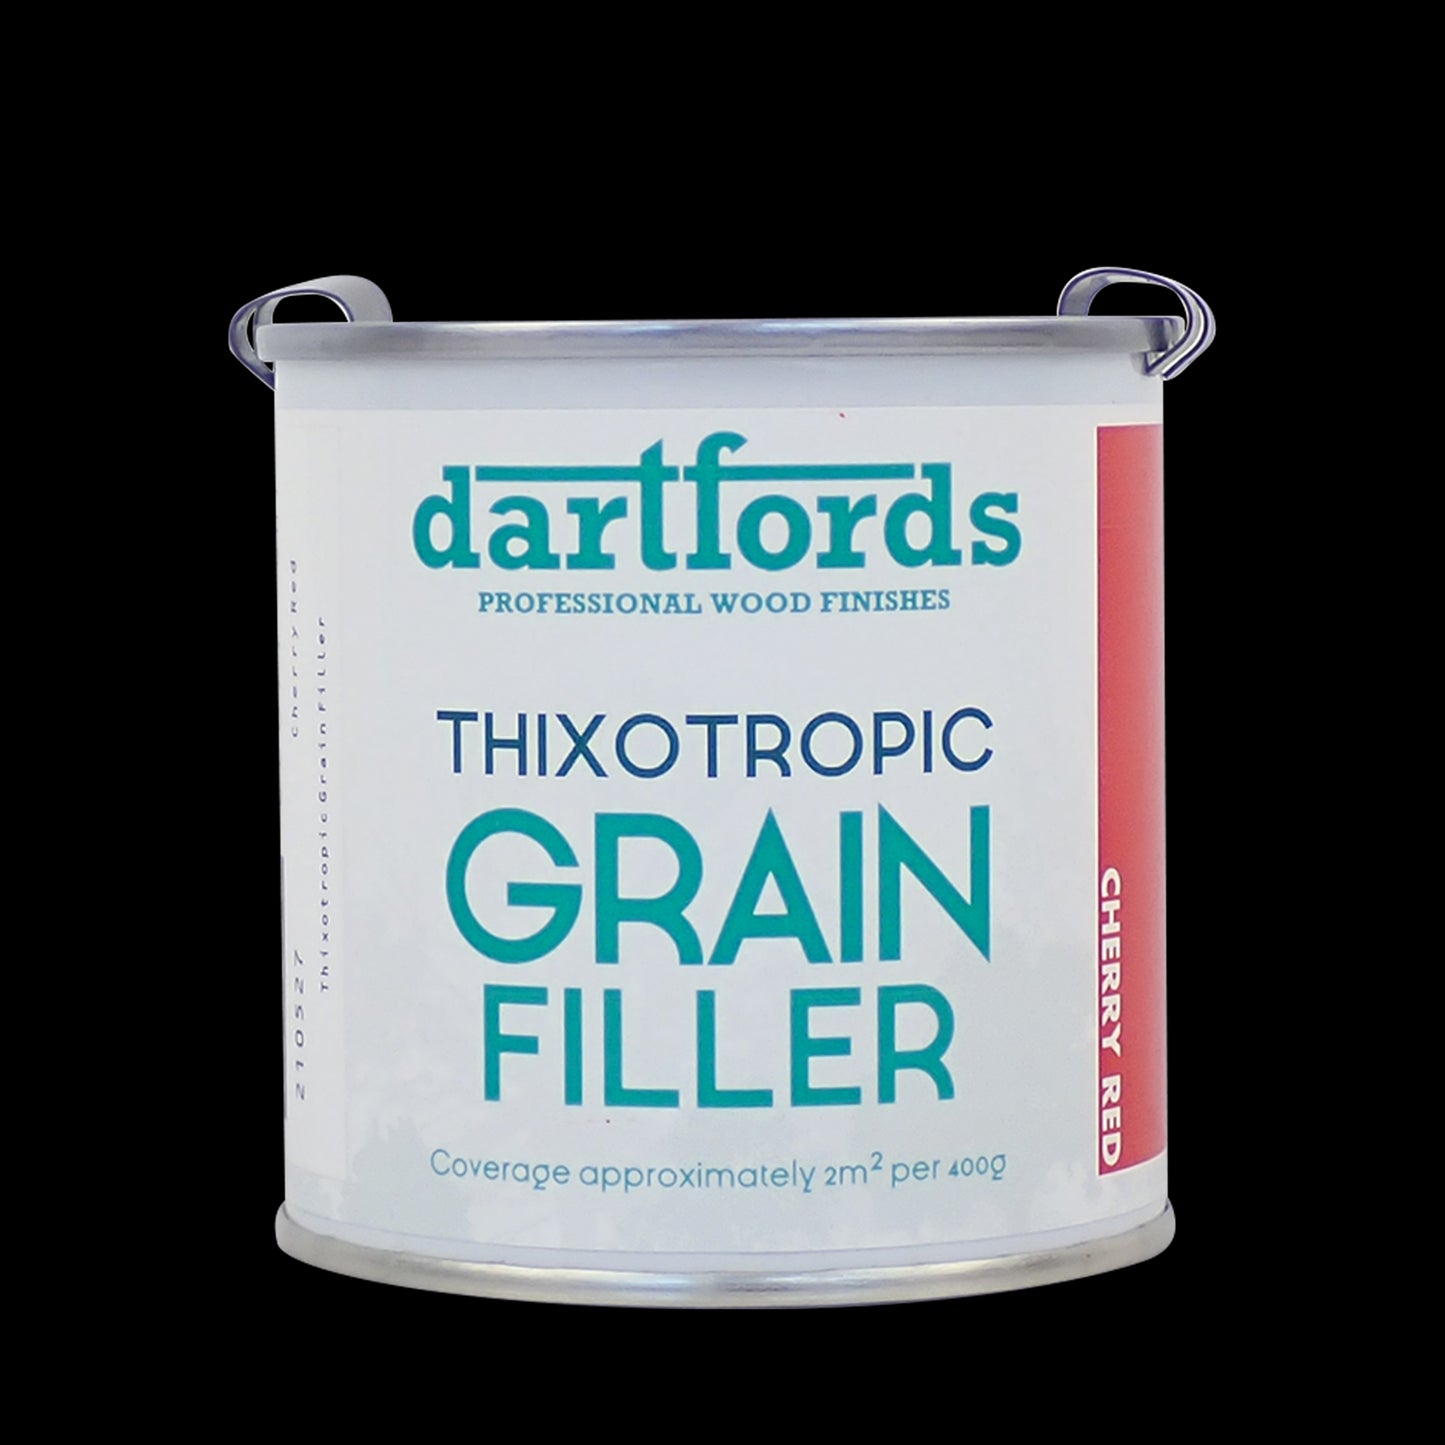 dartfords Cherry Red Thixotropic Grain Filler - 400g Tin